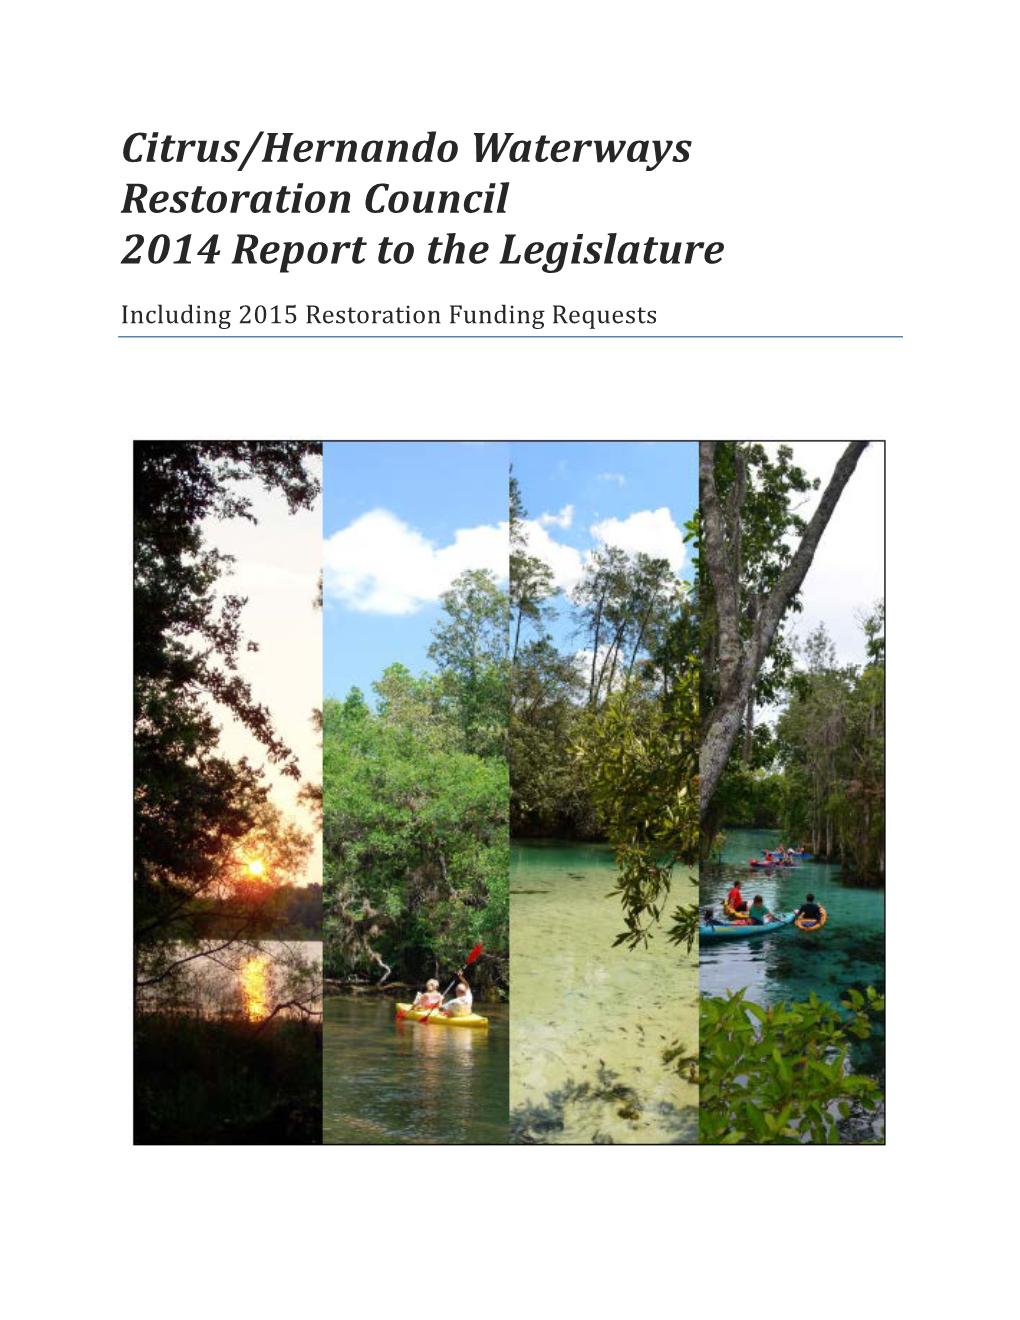 Citrus/Hernando Waterways Task Force • 2014 Report to the Legislature